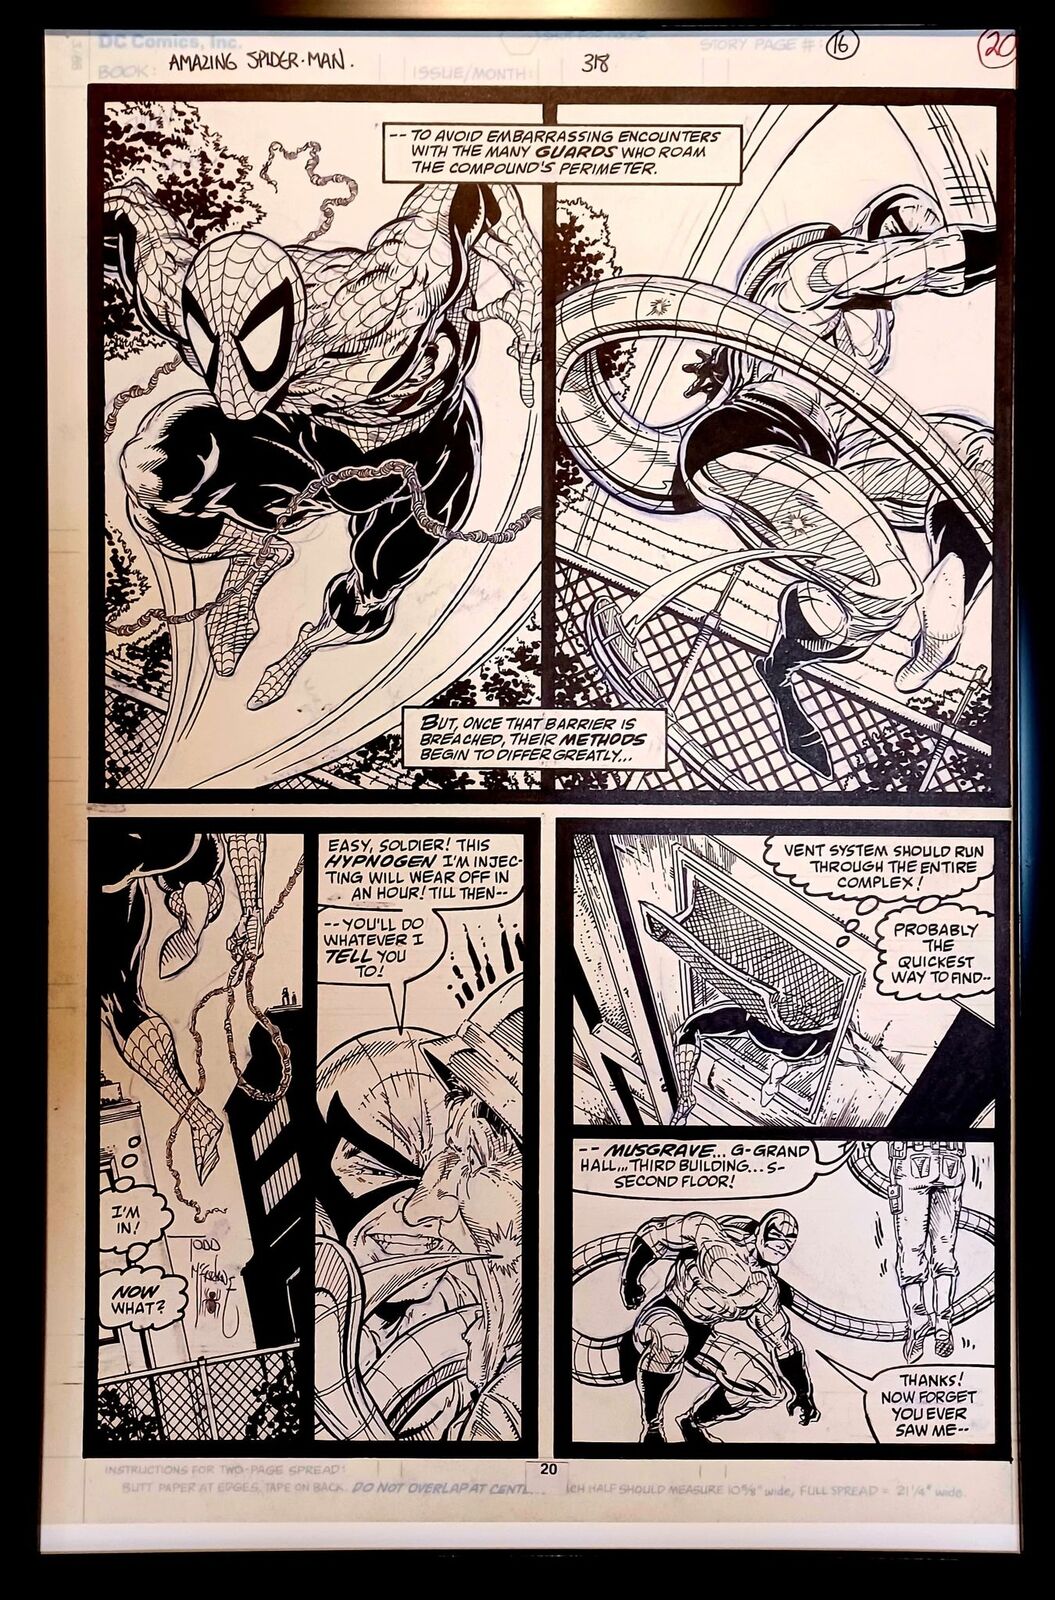 Amazing Spider-Man #318 pg. 16 by Todd McFarlane 11x17 FRAMED Original Art Print